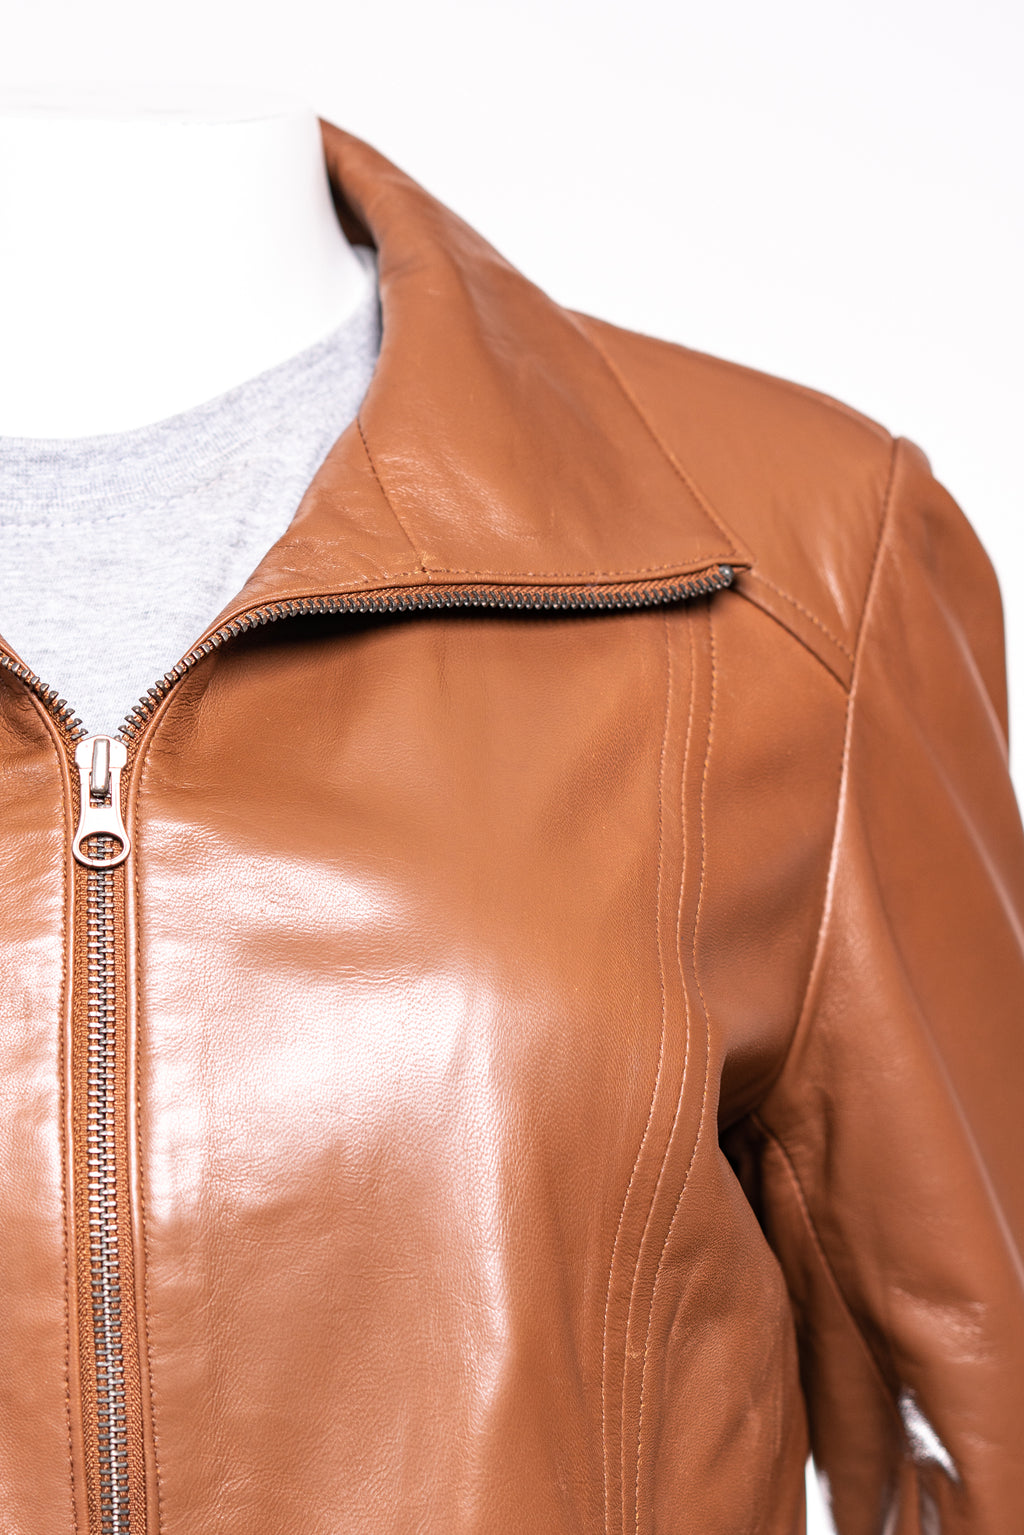 Ladies Tan Hip Length Toggle Waist Leather Jacket: Berta